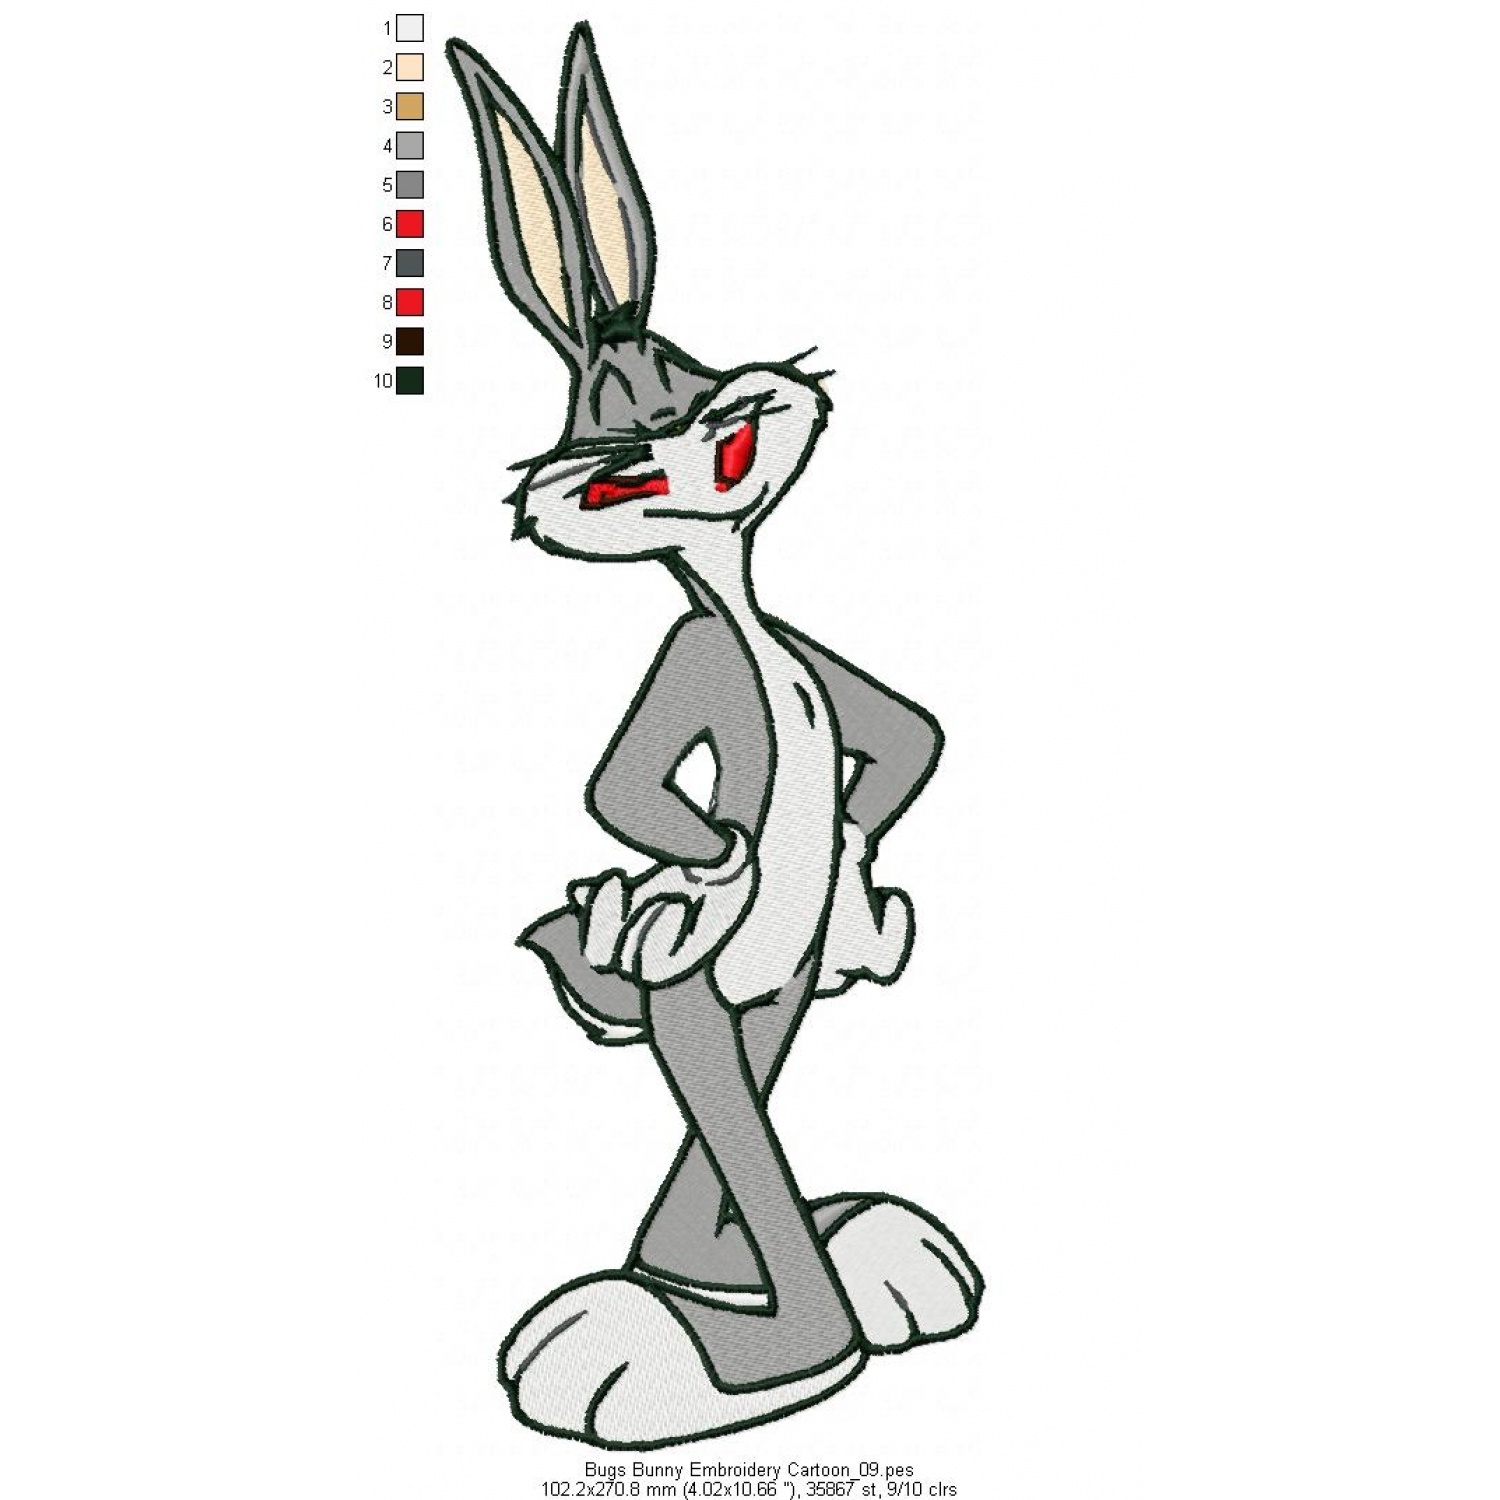 Bugs bunny embroidery cartoon 09